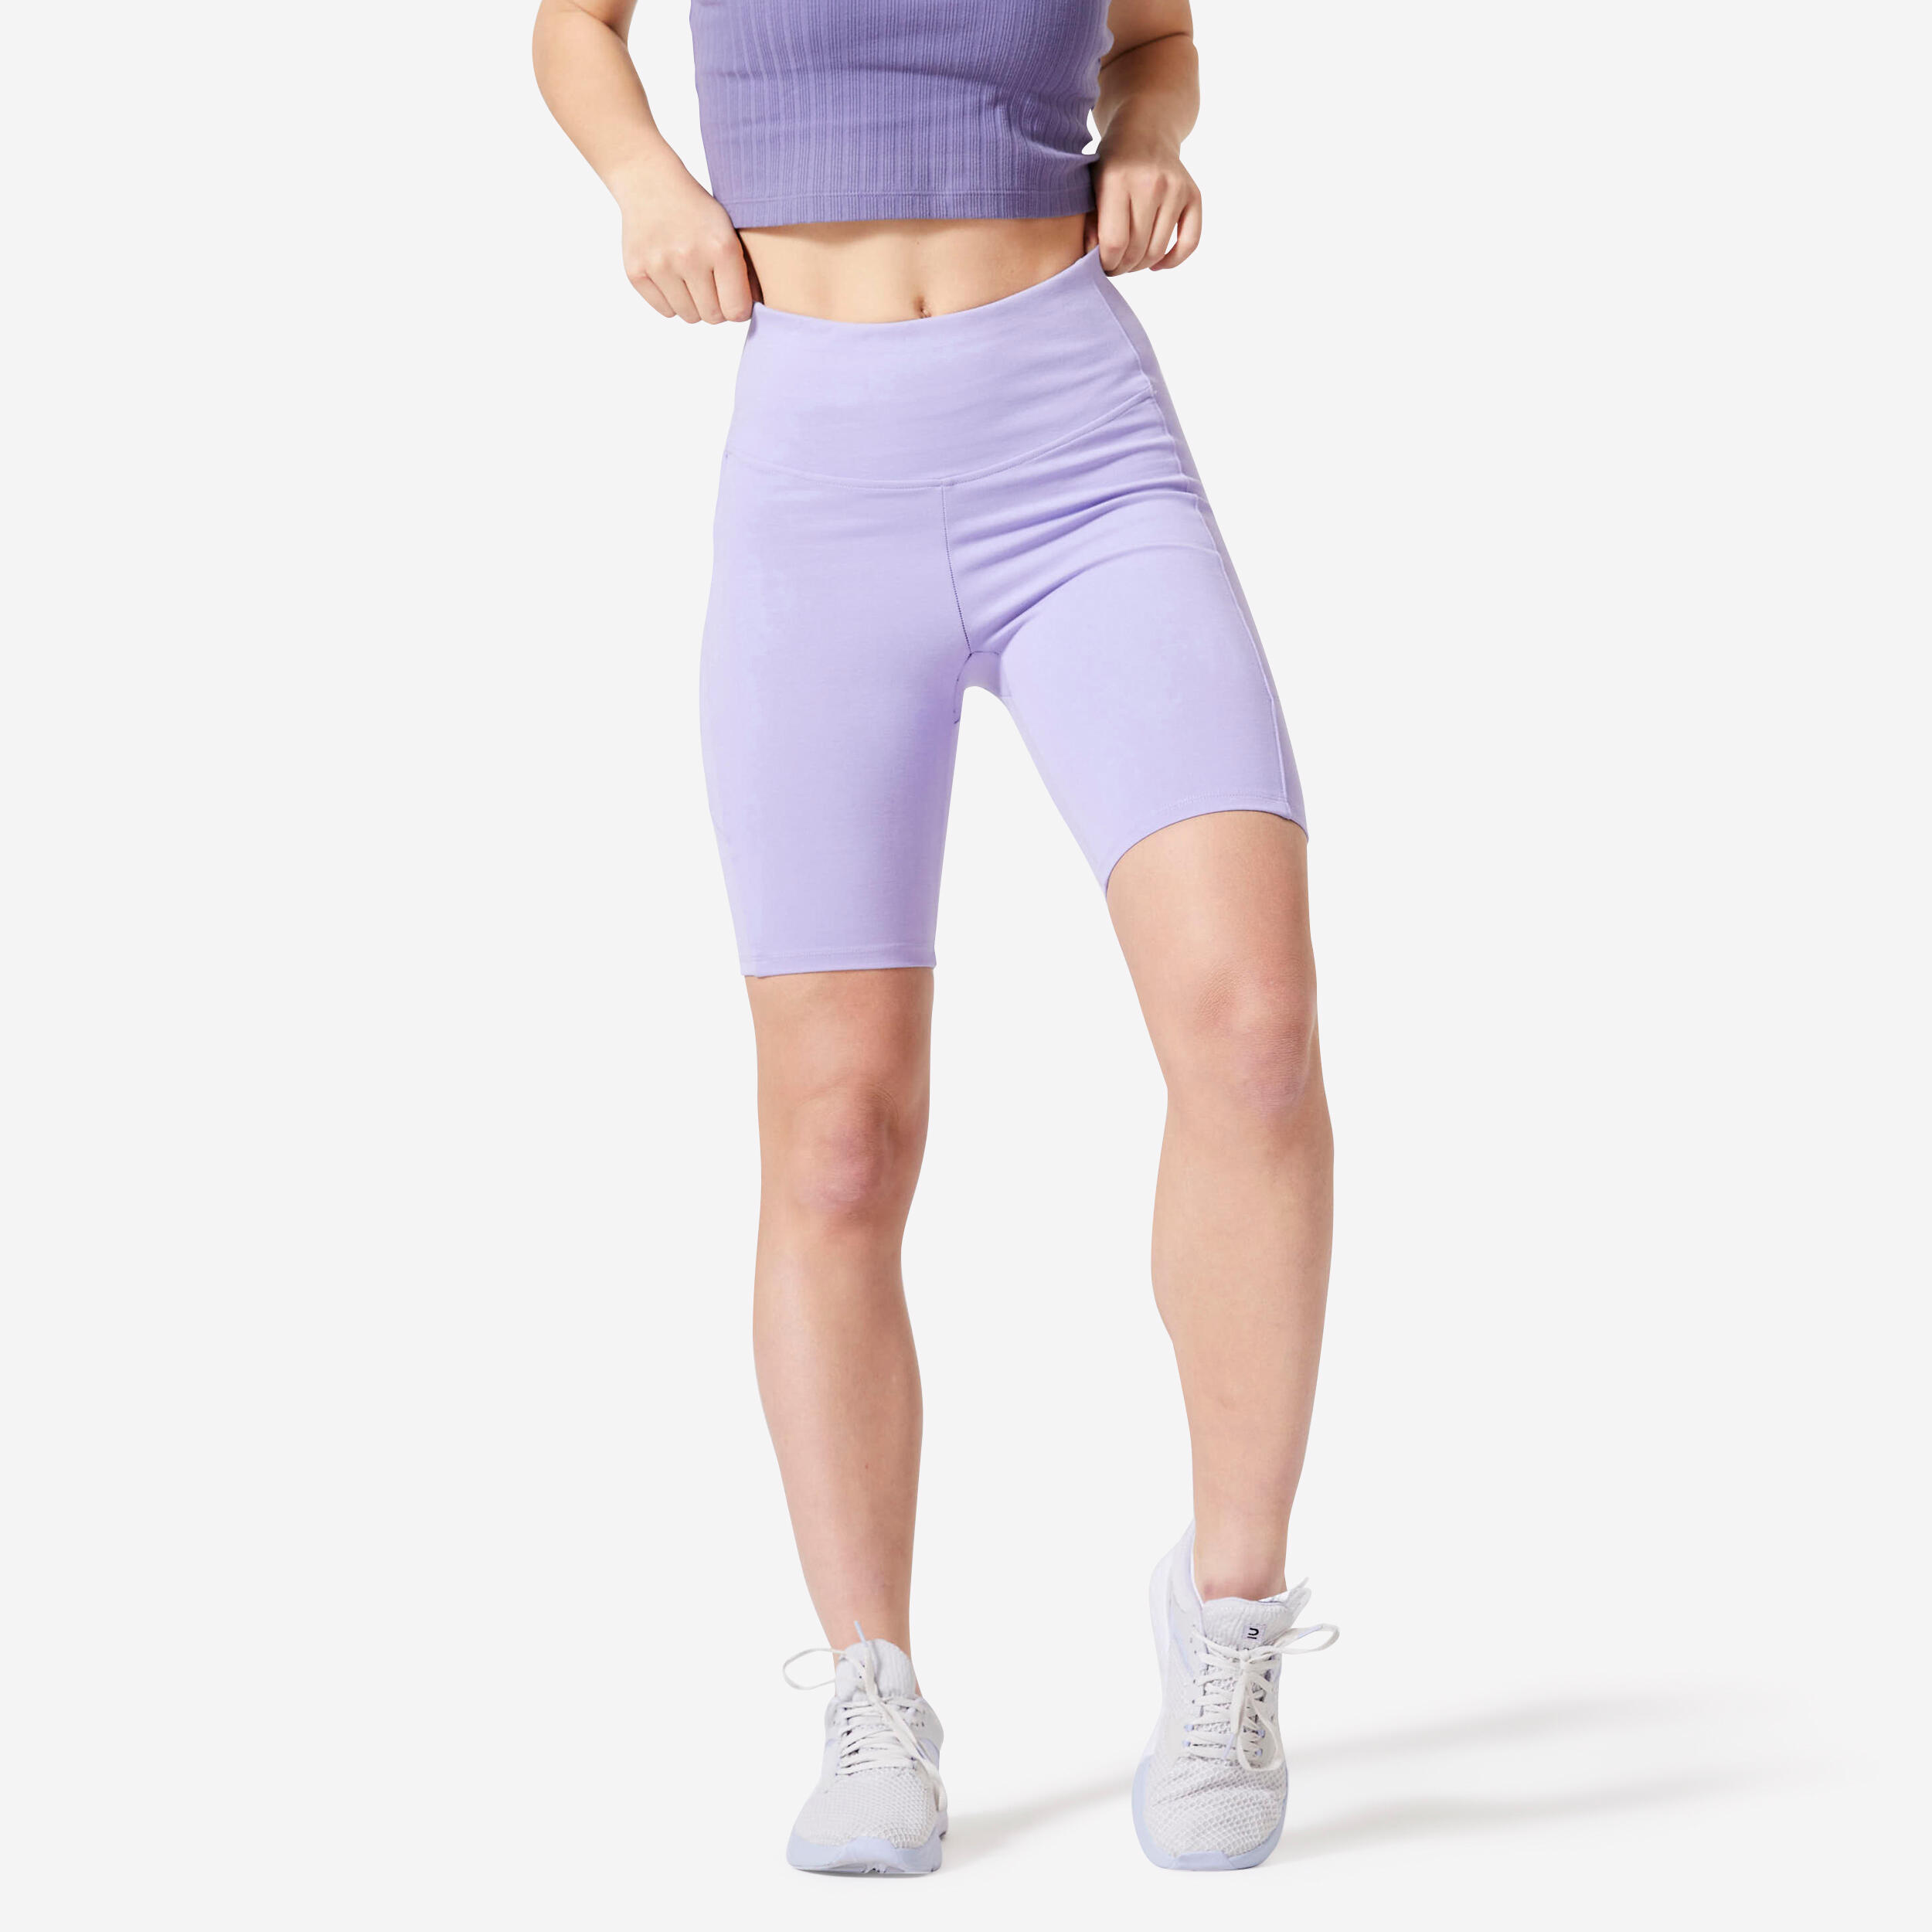 short cycliste fitness femme galbant - 520 violet néon - domyos